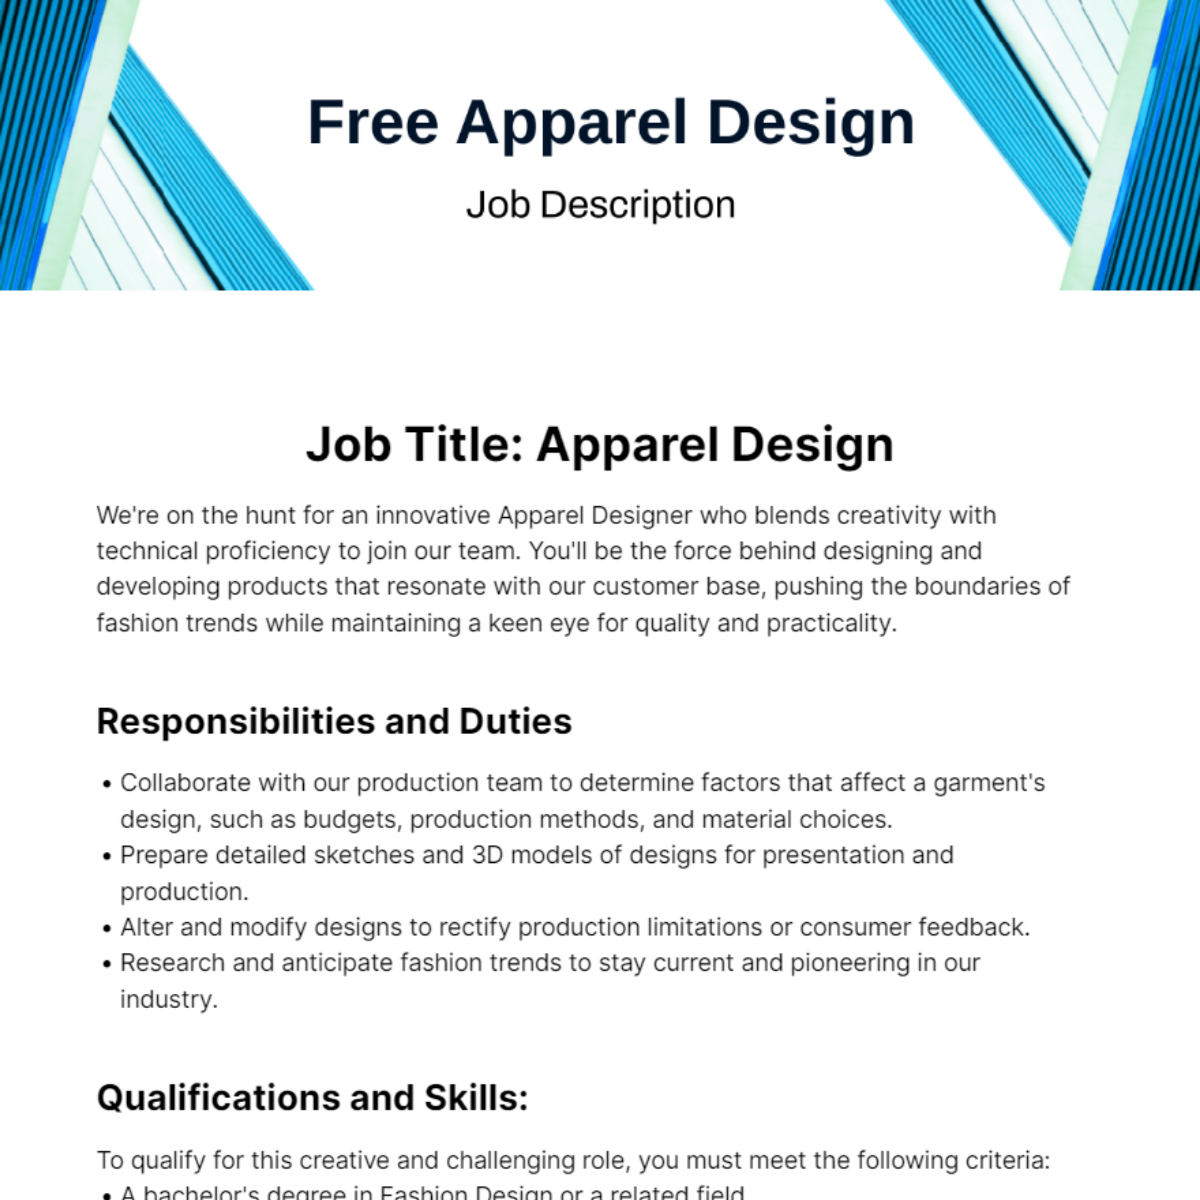 Free Apparel Design Job Description Template